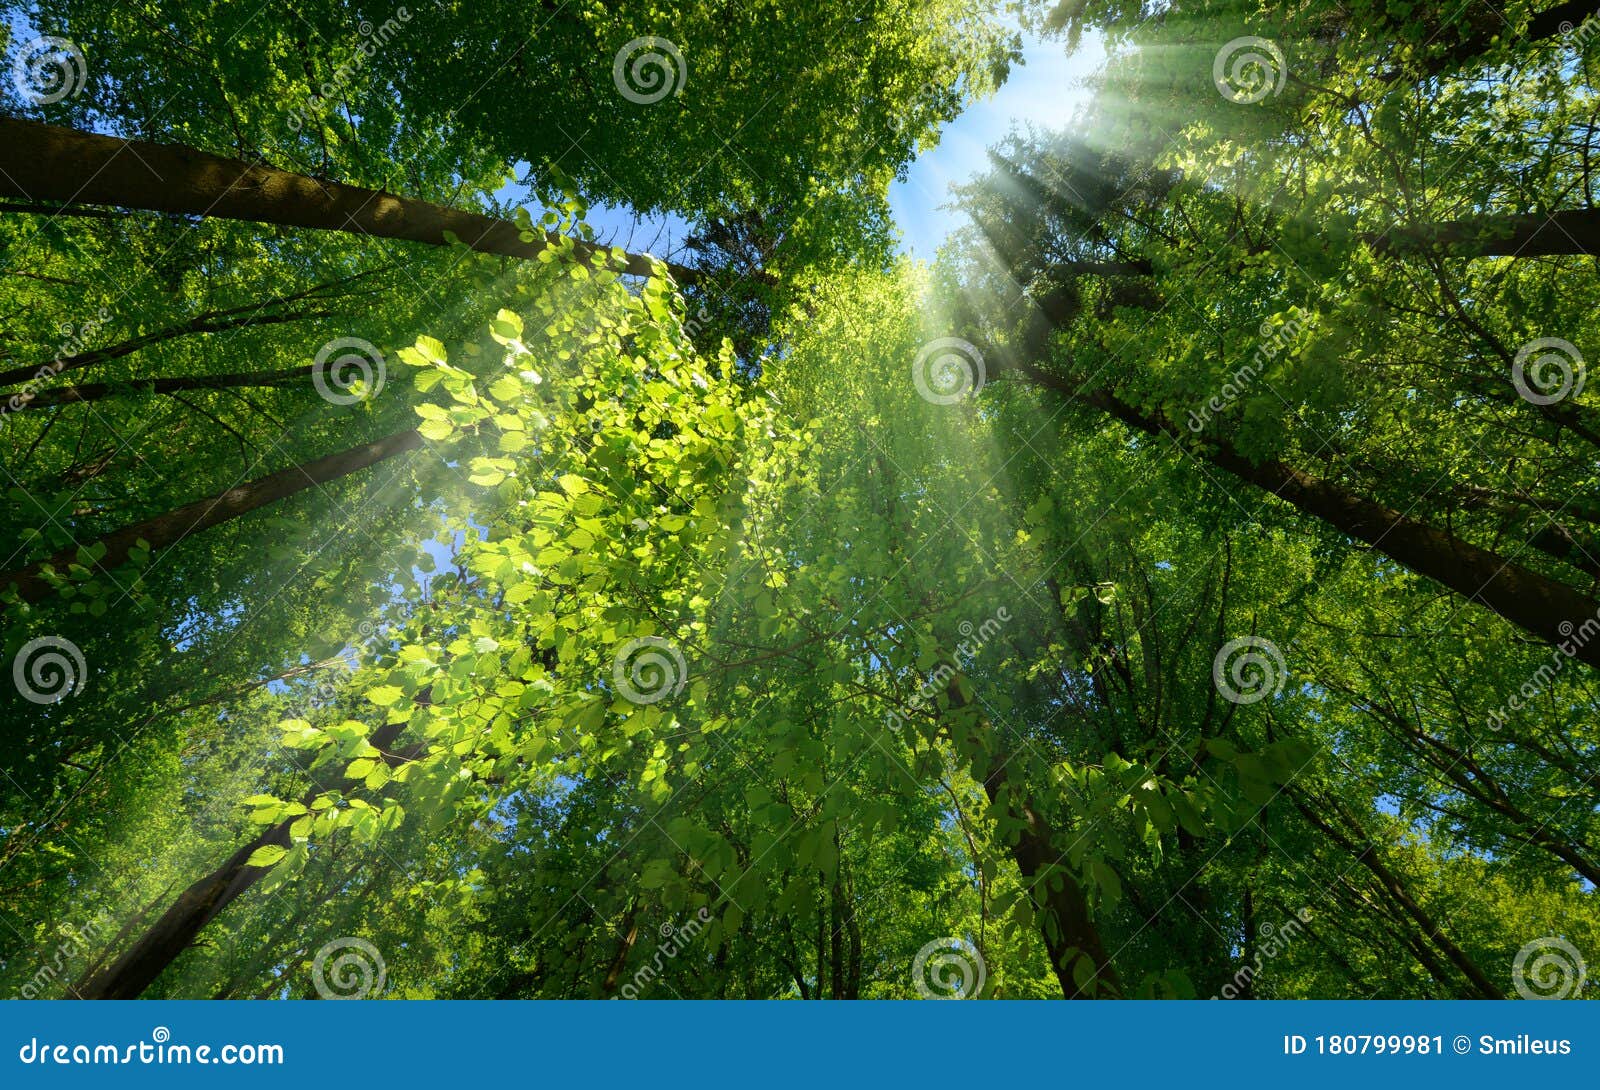 rays of light beautifully enhancing a tree canopy